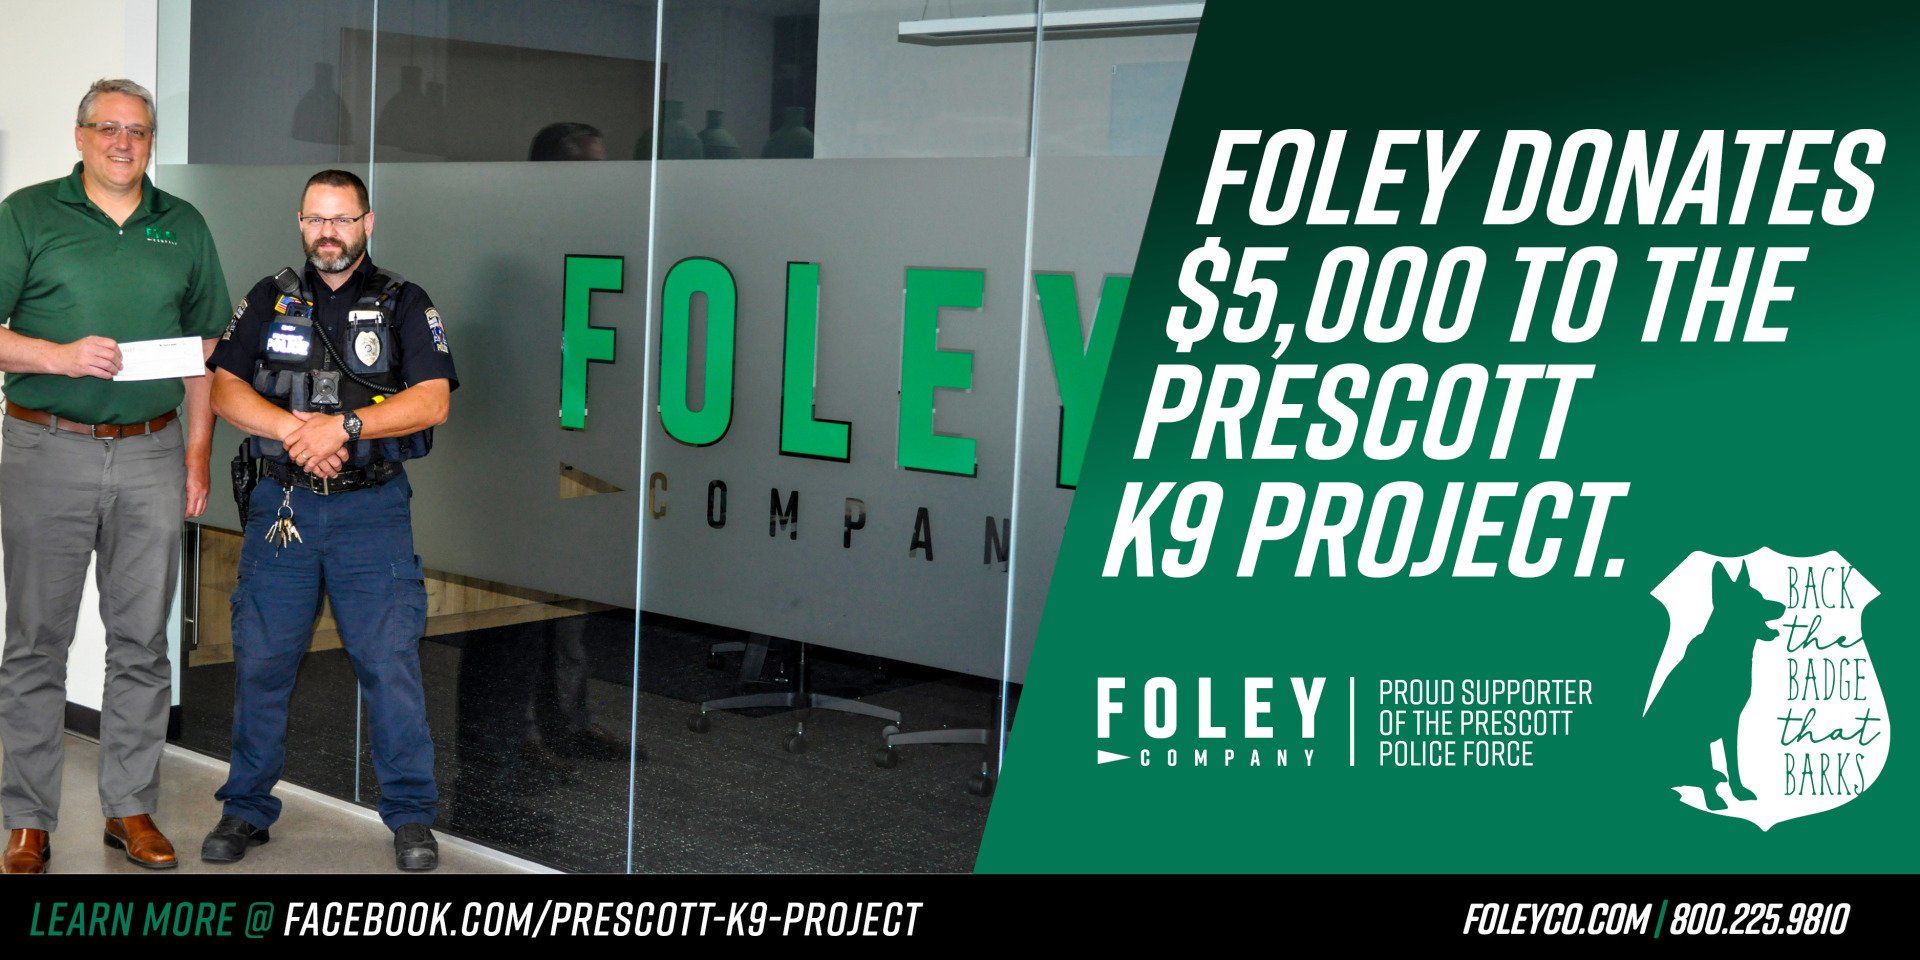 Foley donates to Prescott K9 Project